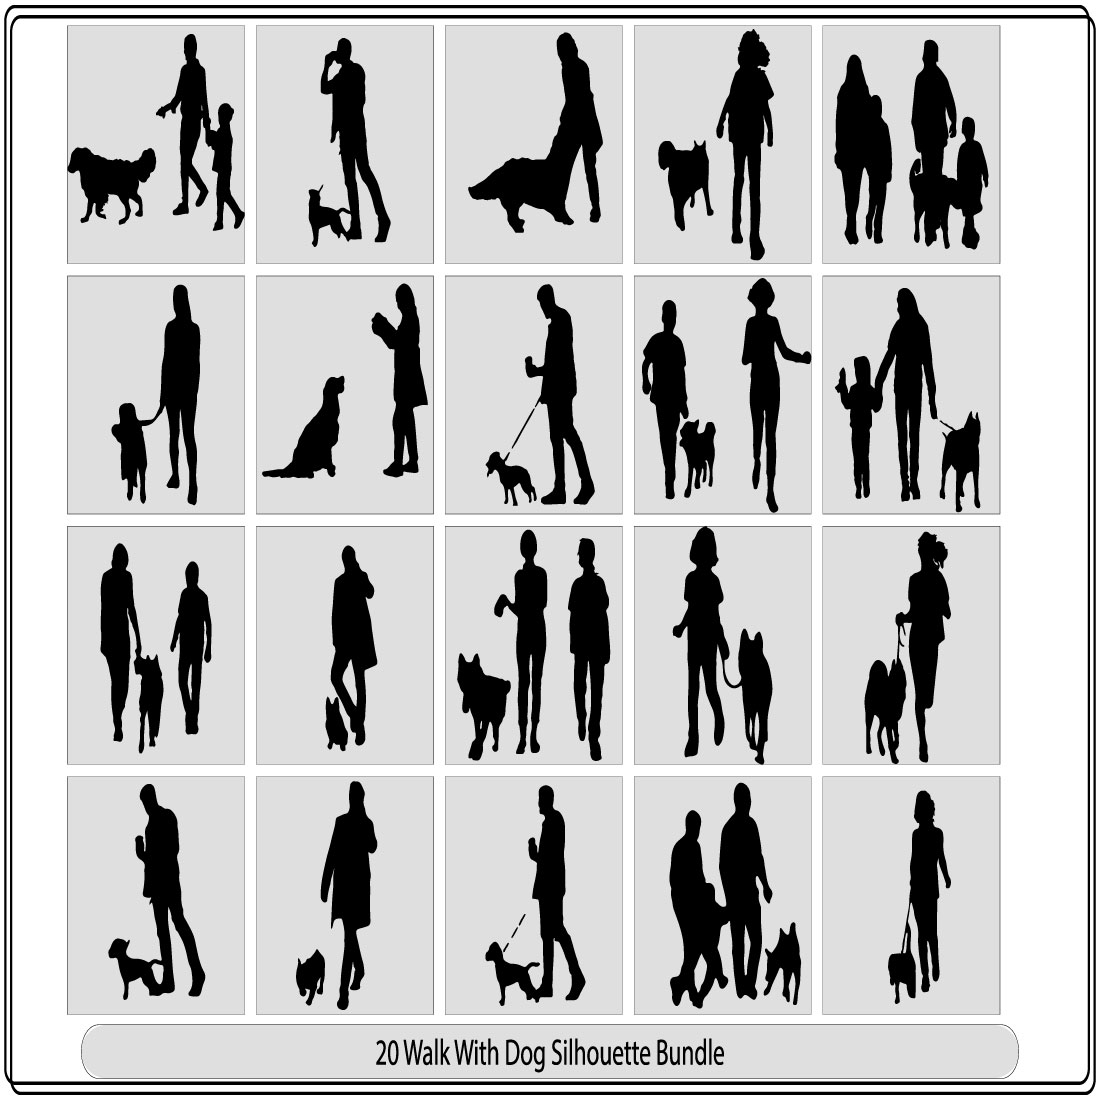 People walking with dogsA man walking his dog, Man Walking Dog,Black and white vector illustration preview image.